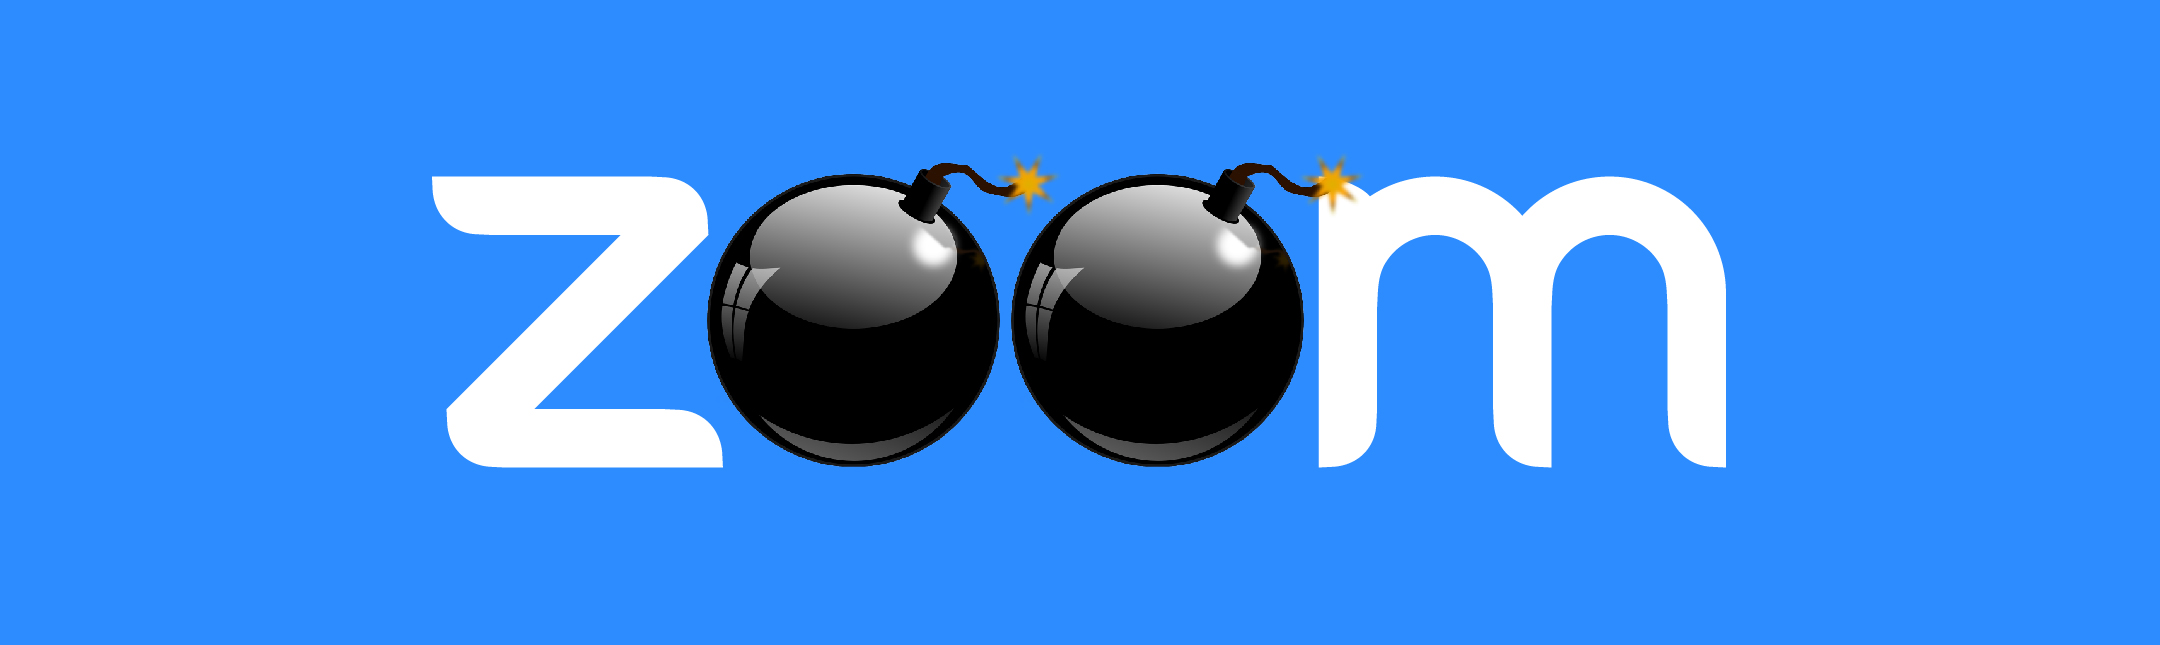 Zoom logo with cartoon bombs